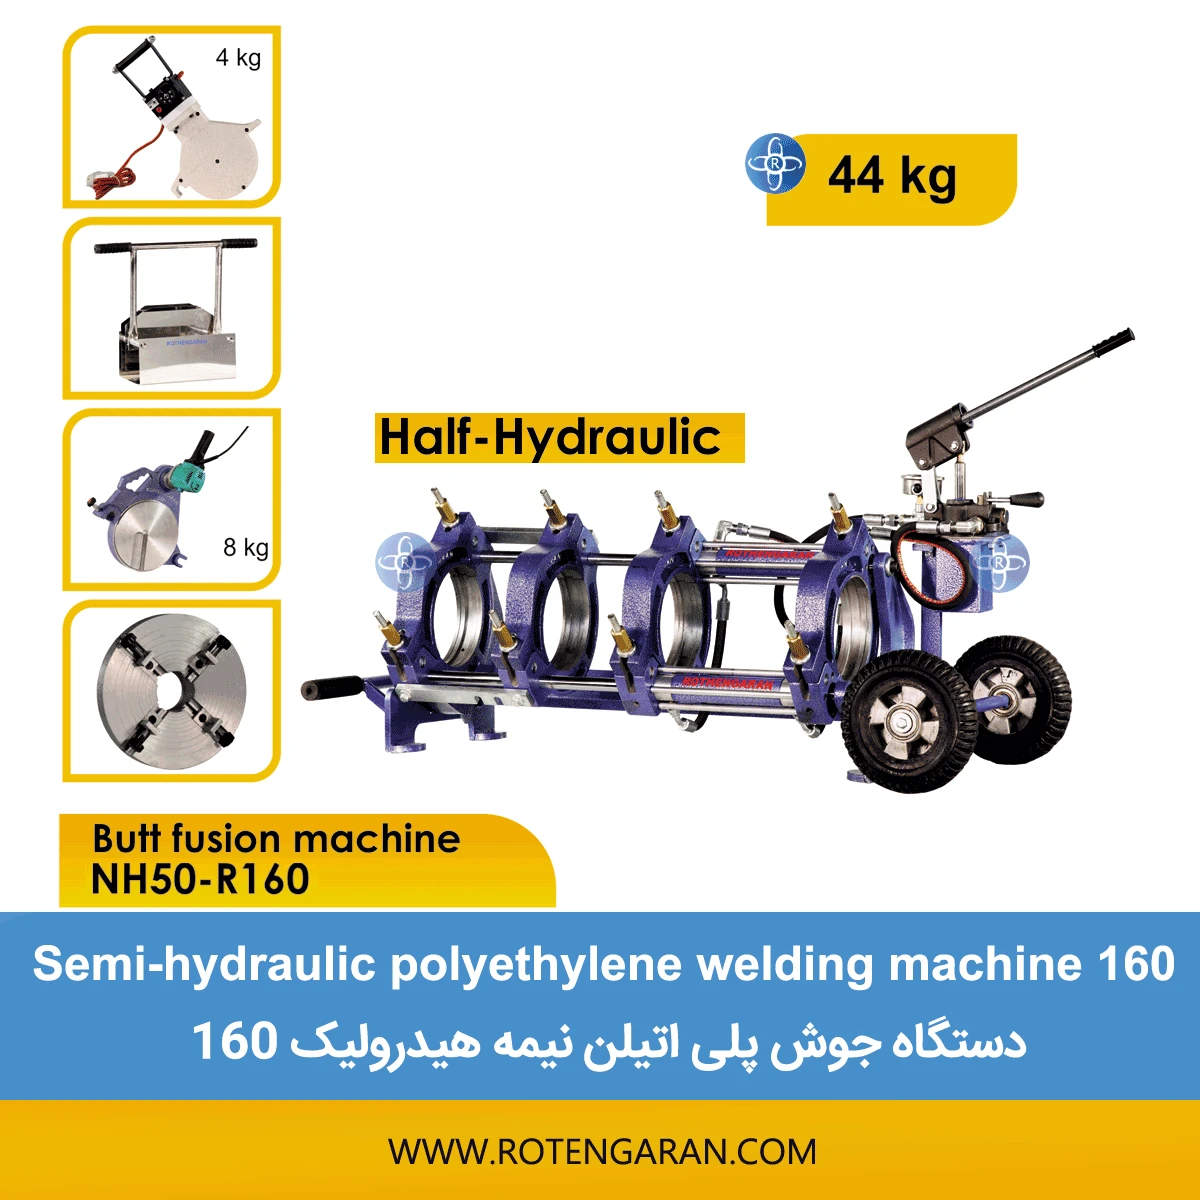  دستگاه جوش پلی اتیلن نیمه هیدرولیک 160